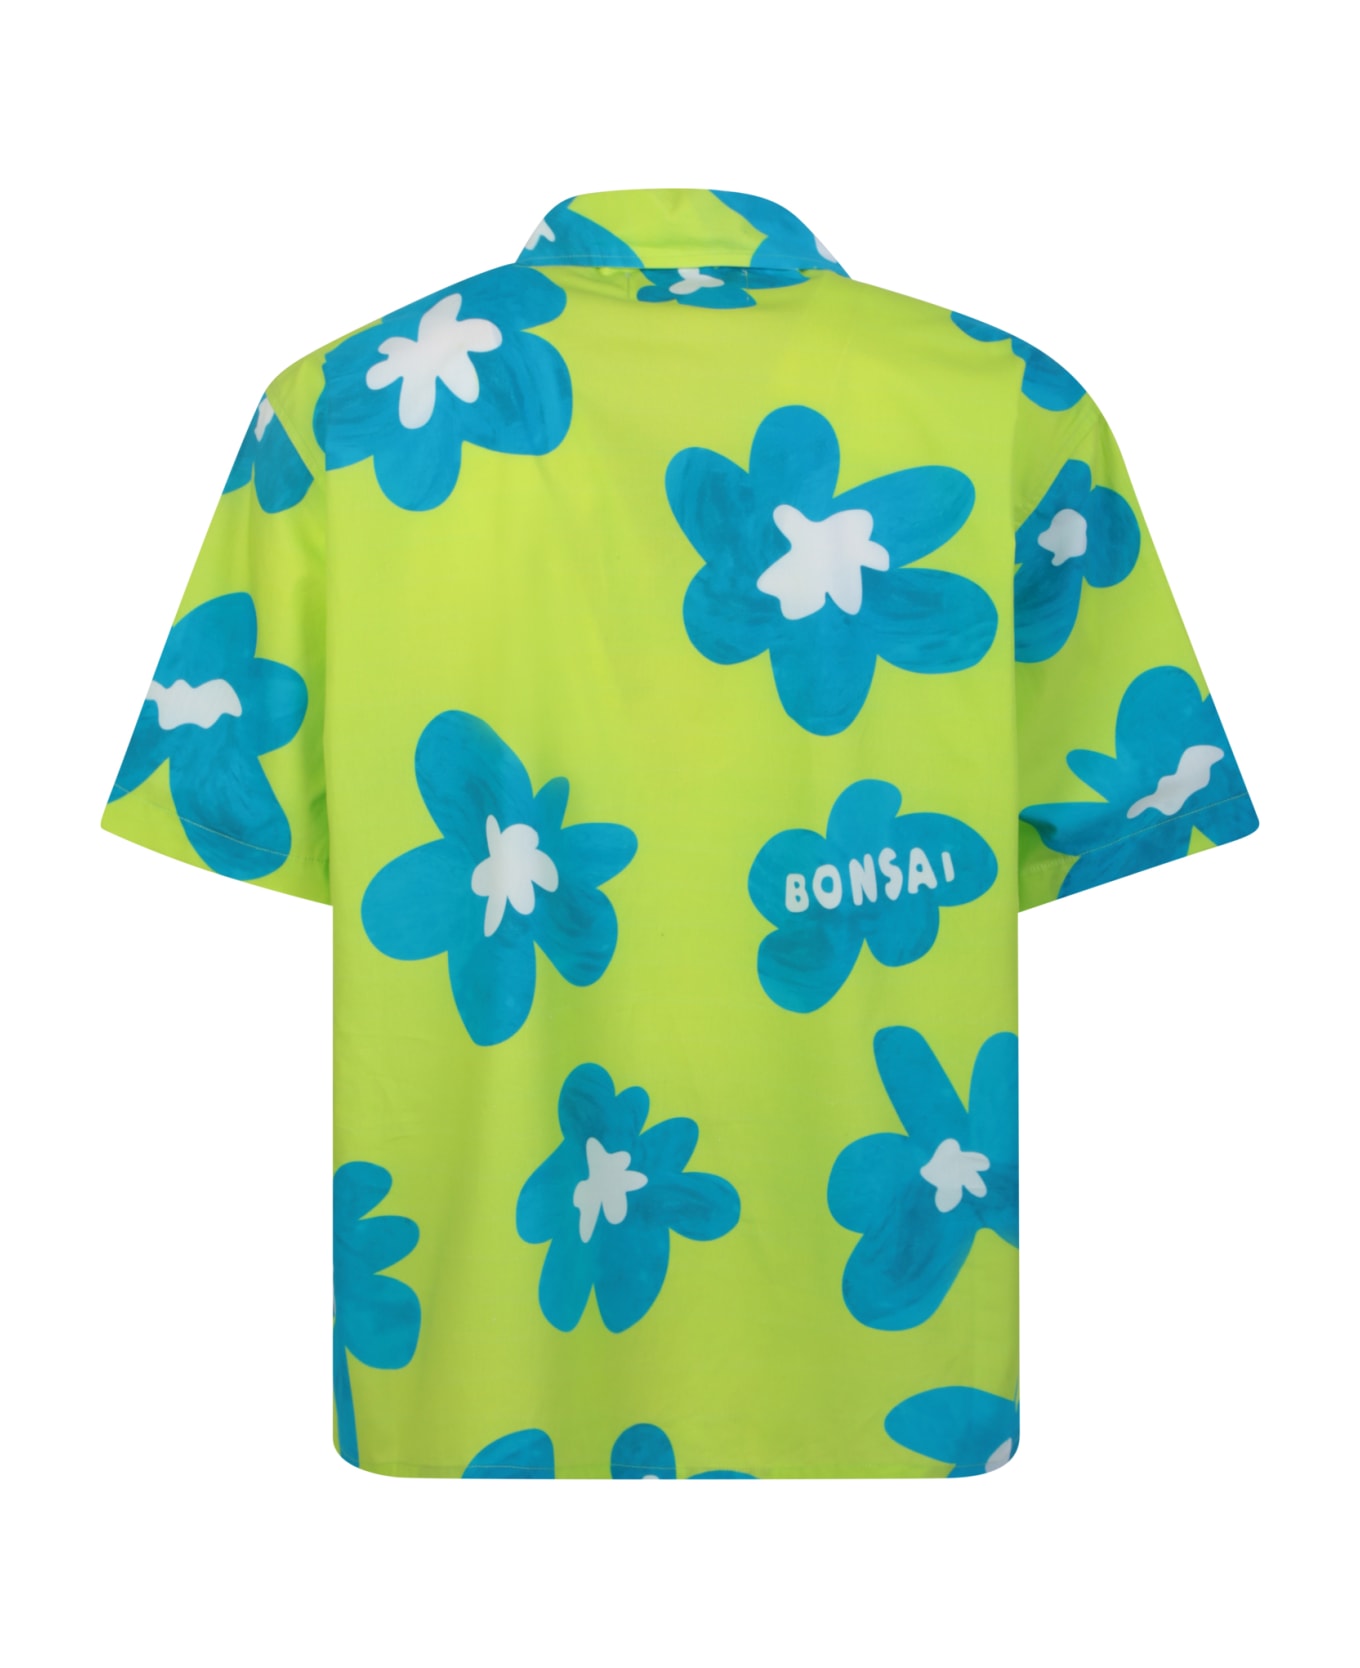 Bonsai Floral Print Lime Green/blue Bowling Shirt - Green